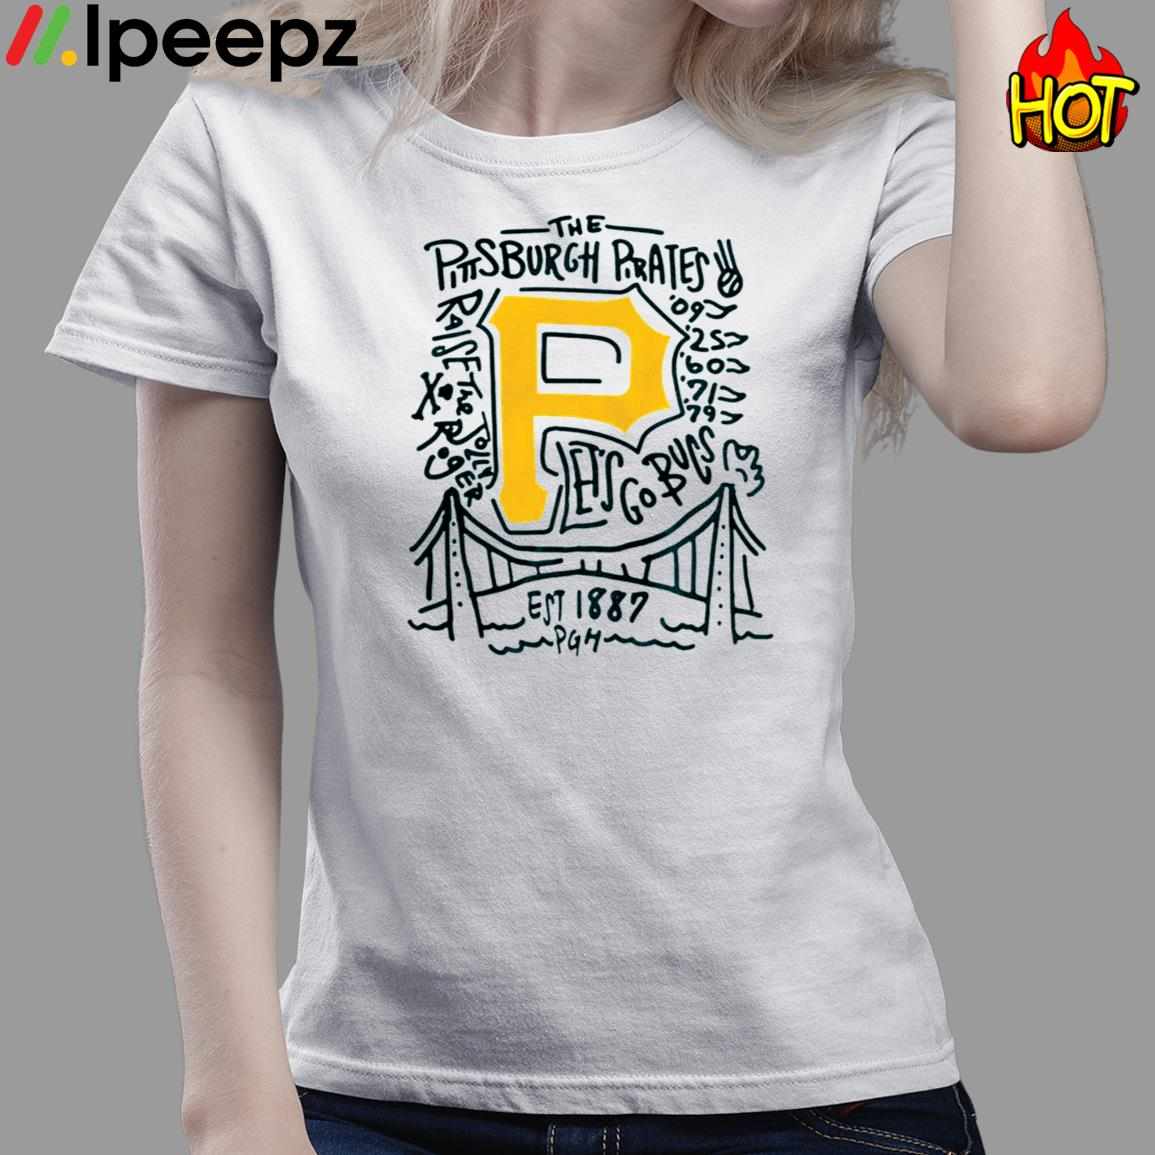 Funny Pittsburgh Pirates Baseball T-shirt 